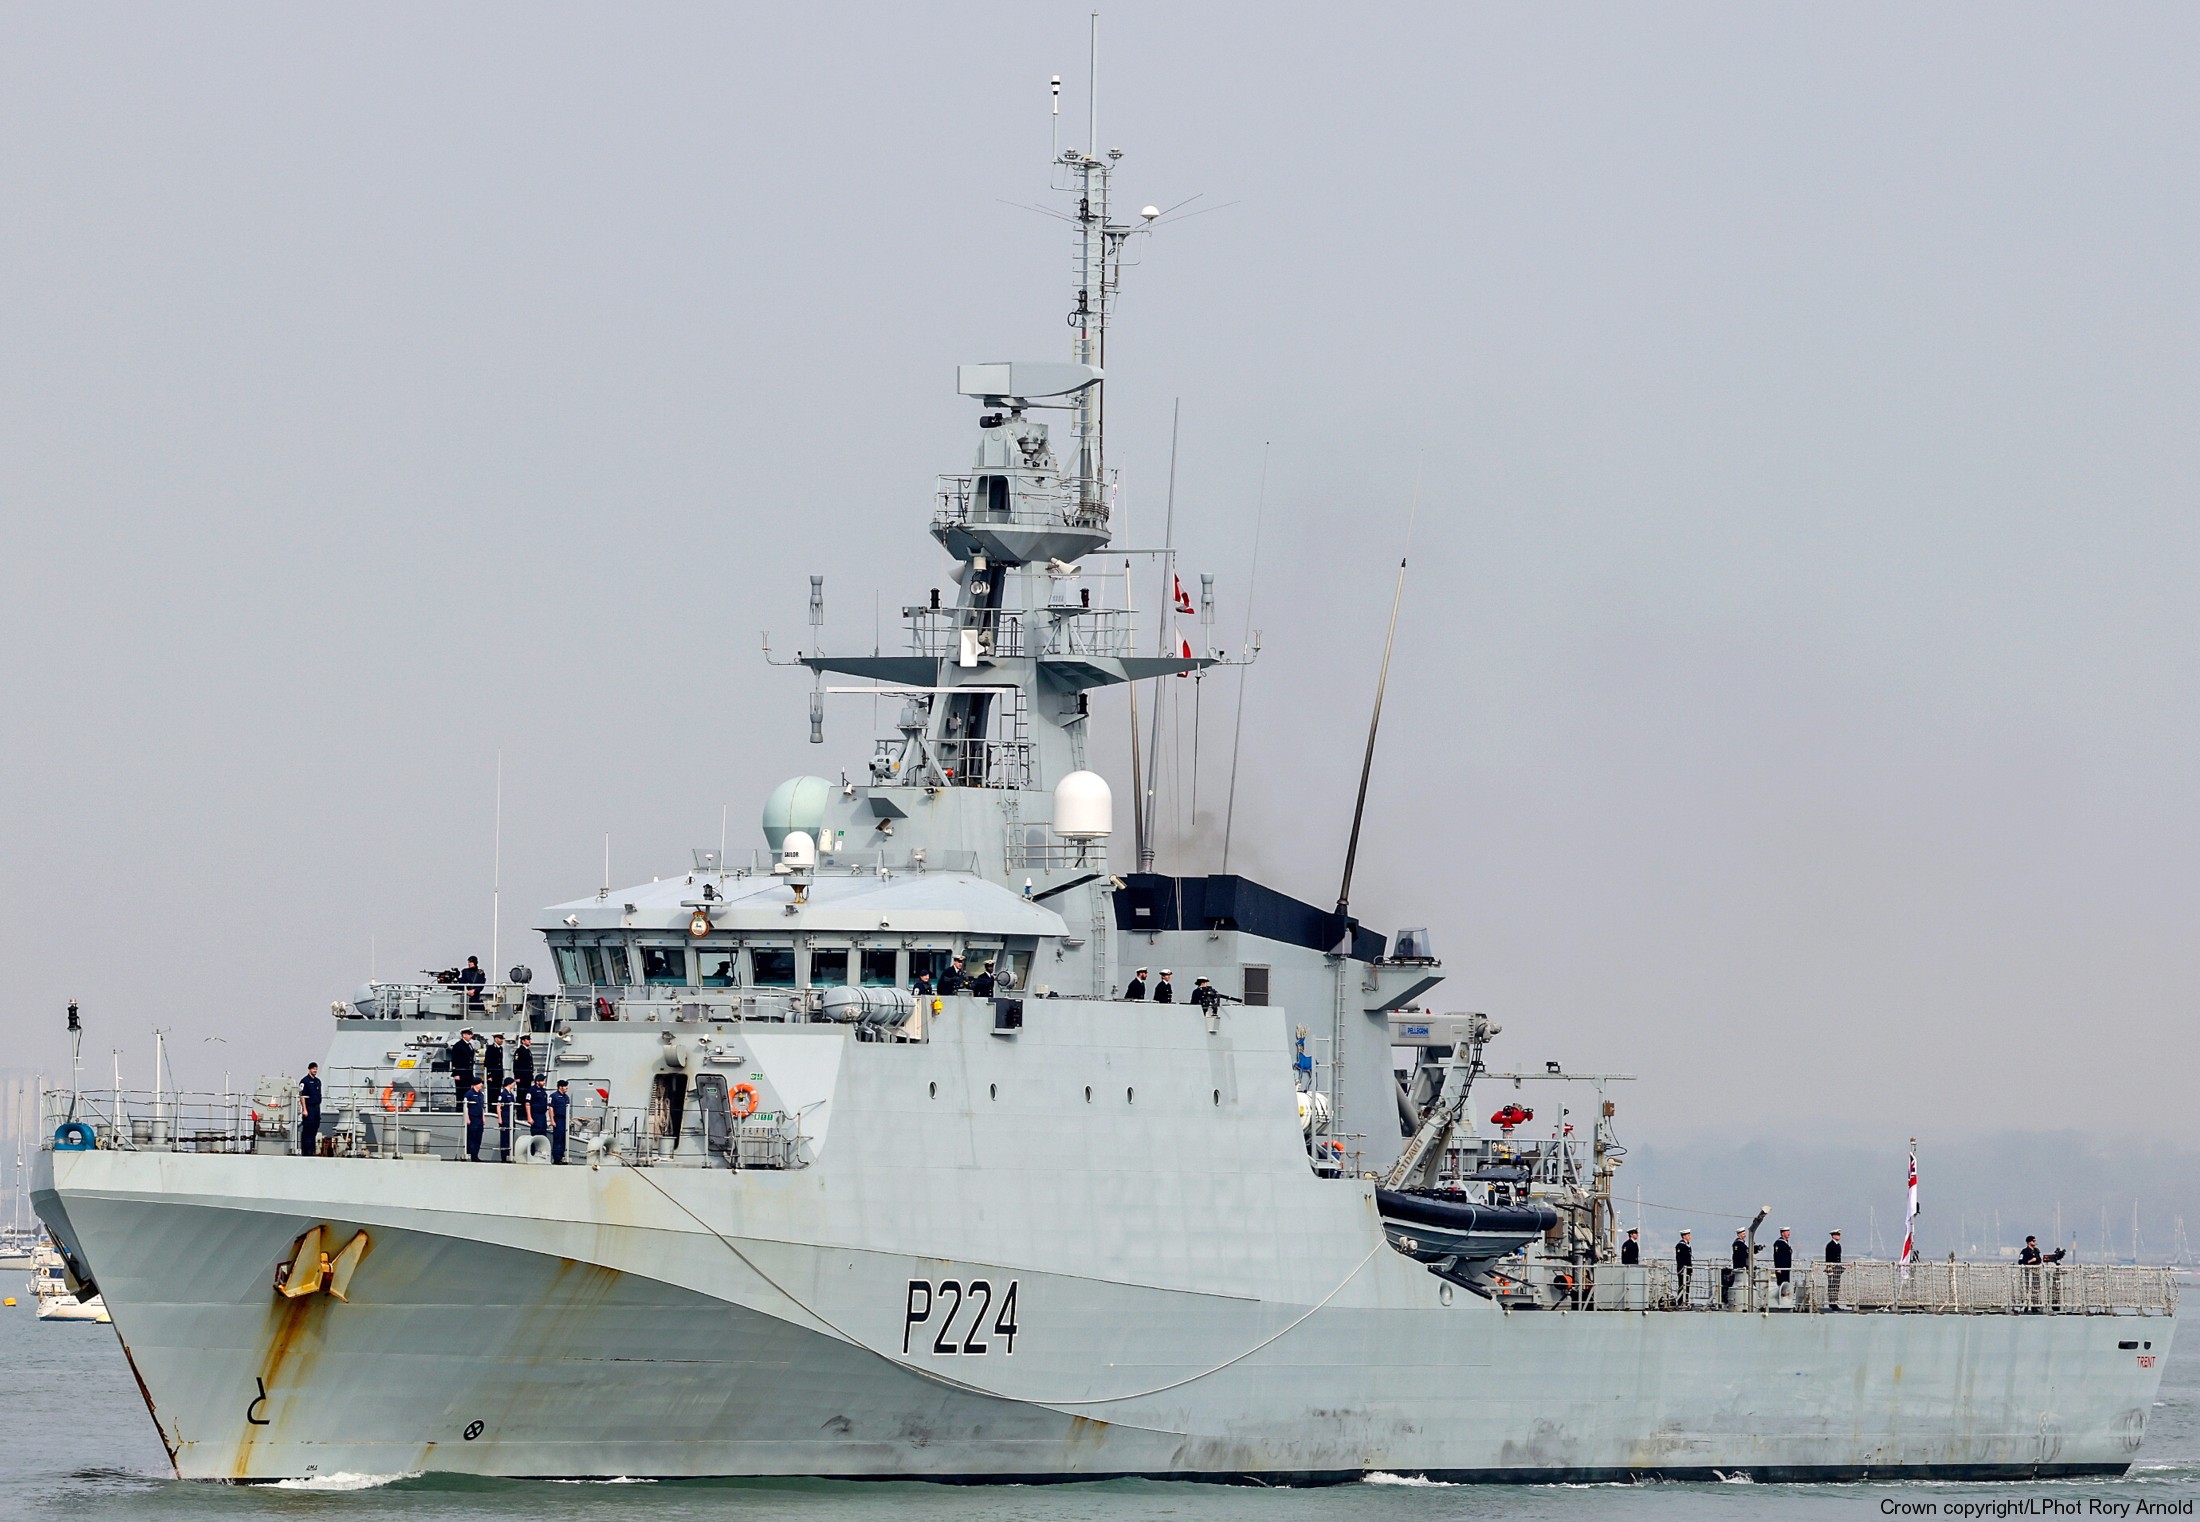 p224 hms trent river class offshore patrol vessel opv royal navy 45c